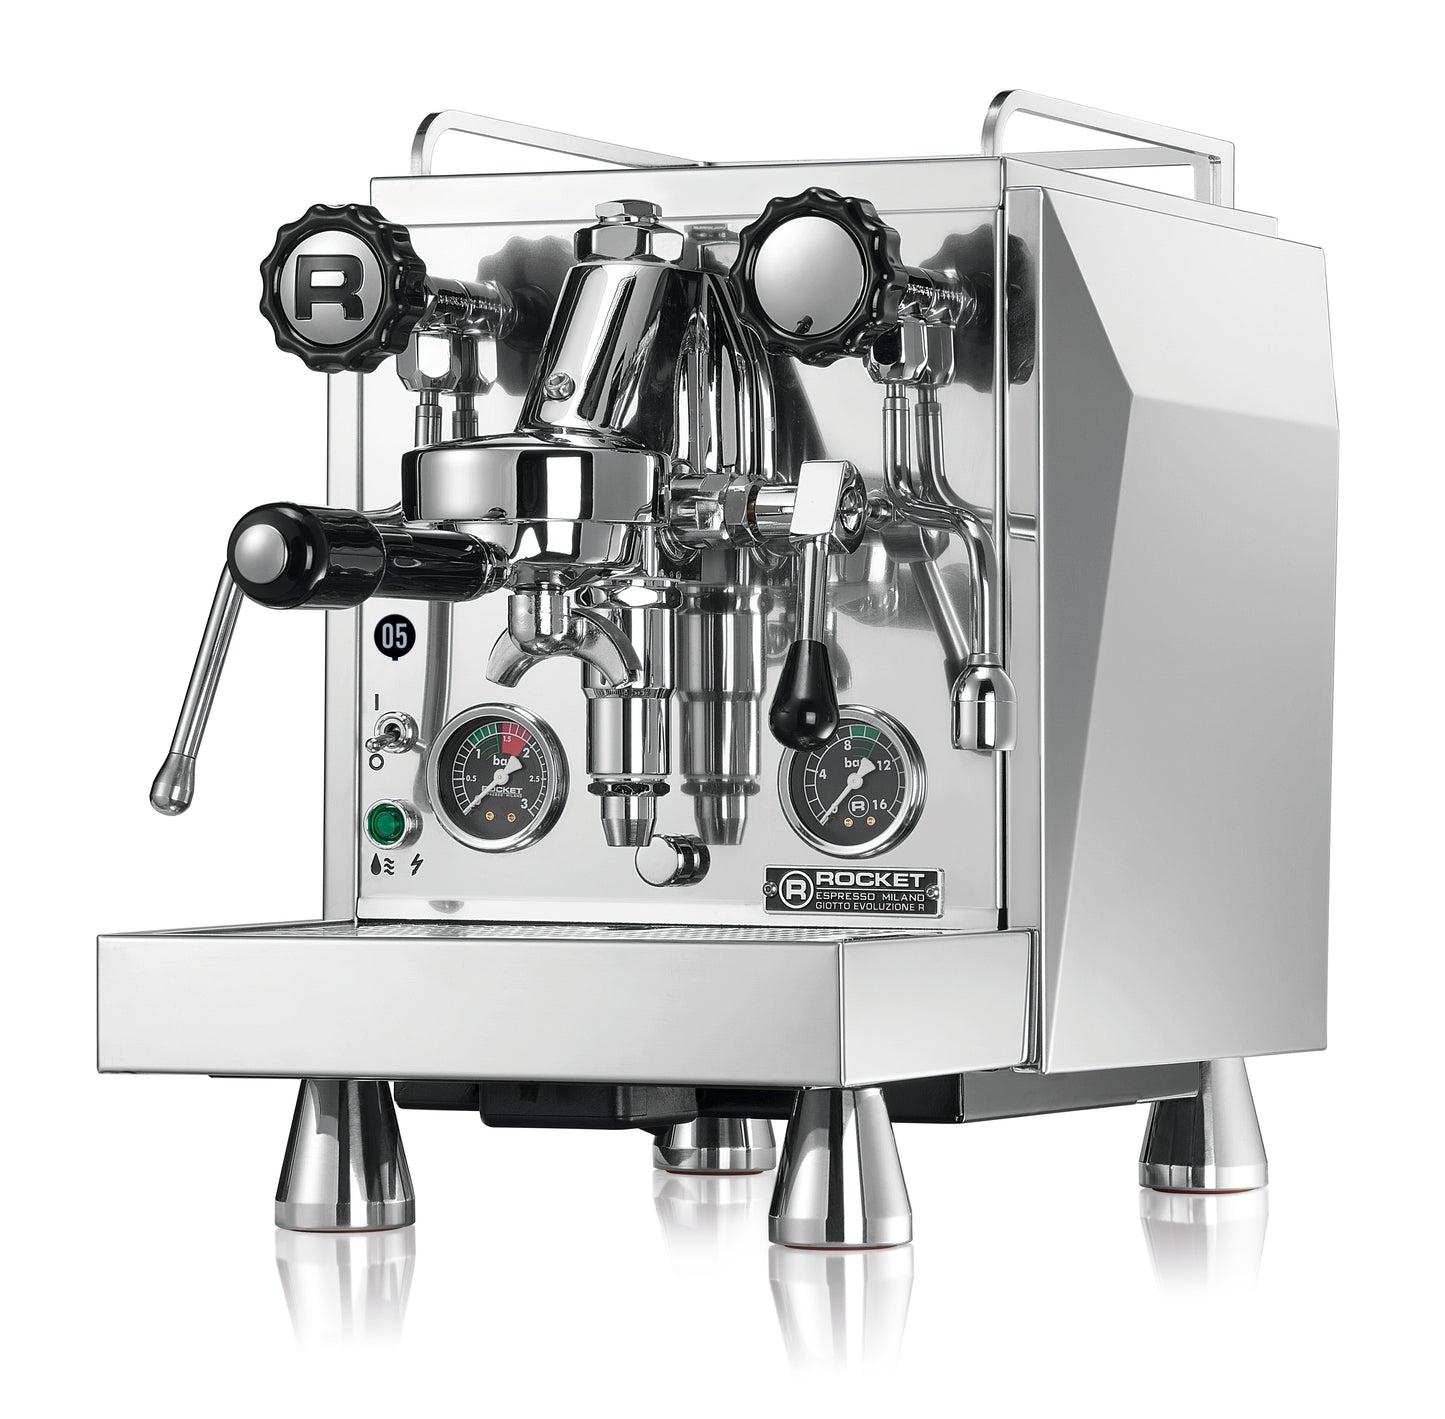 Rocket Cronometro R - Home Espresso Machine